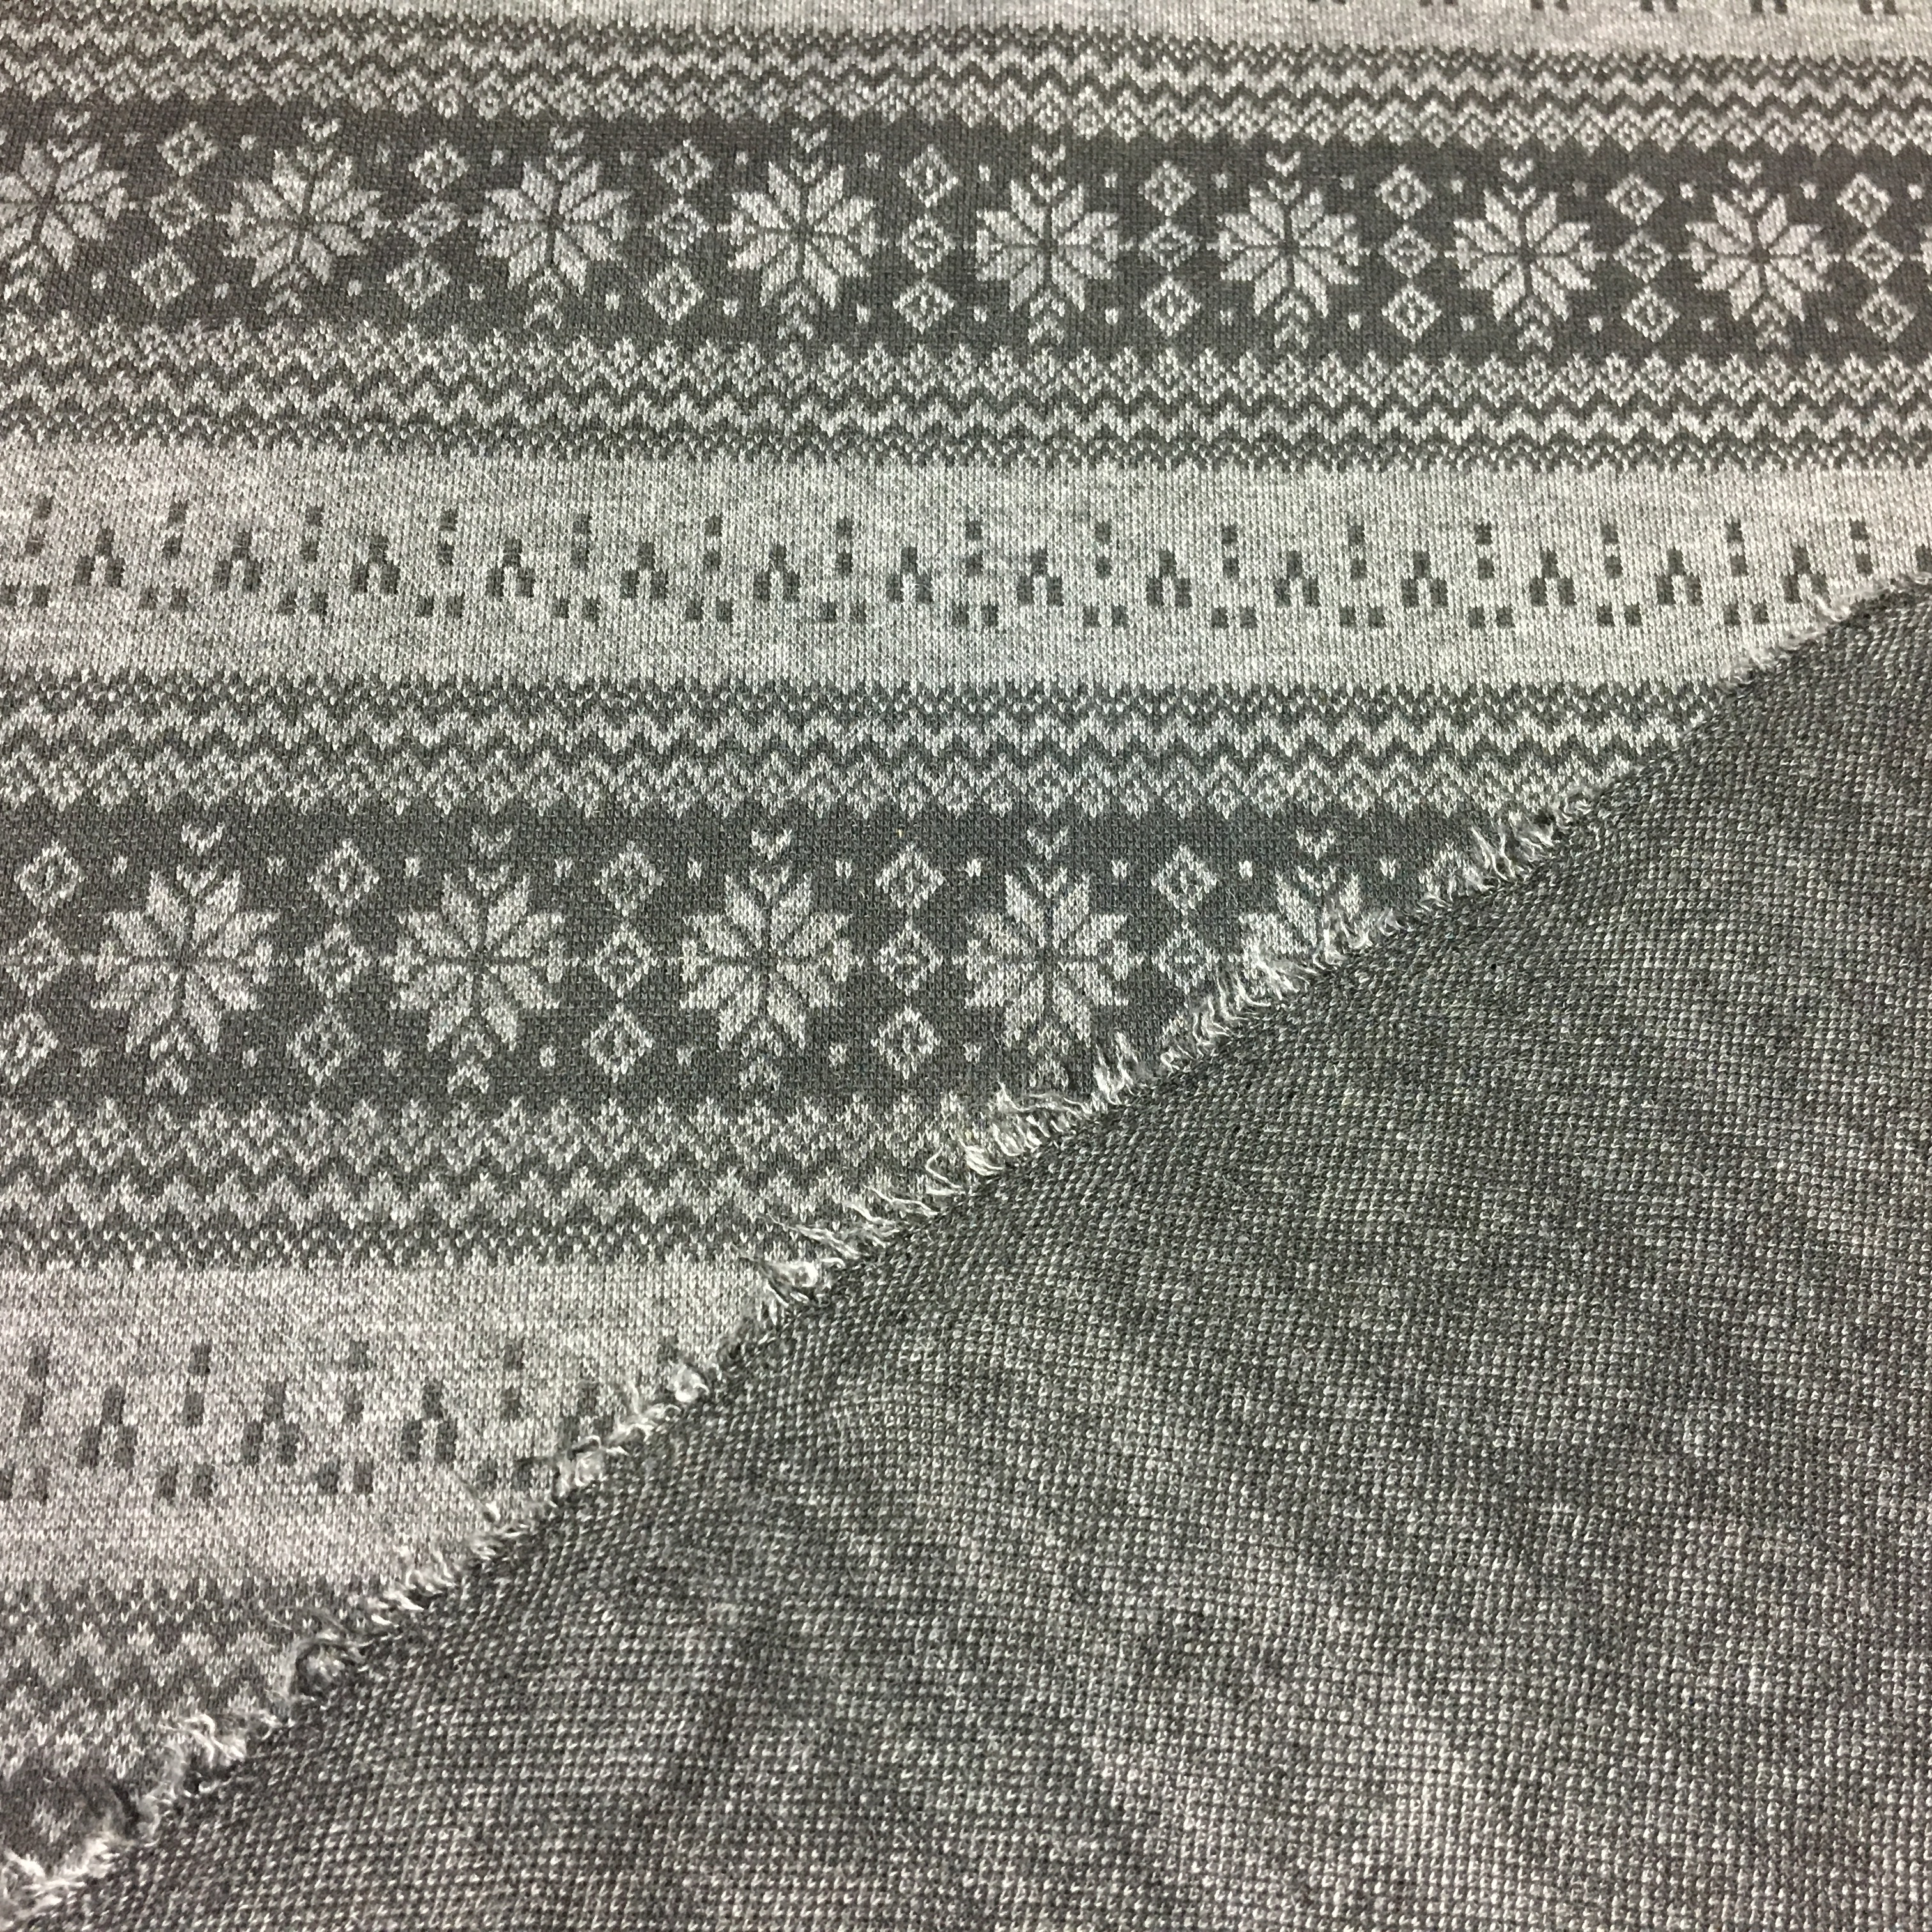 Knitted Pattern Mock Fairisle Double Knit Fabric Greyblack